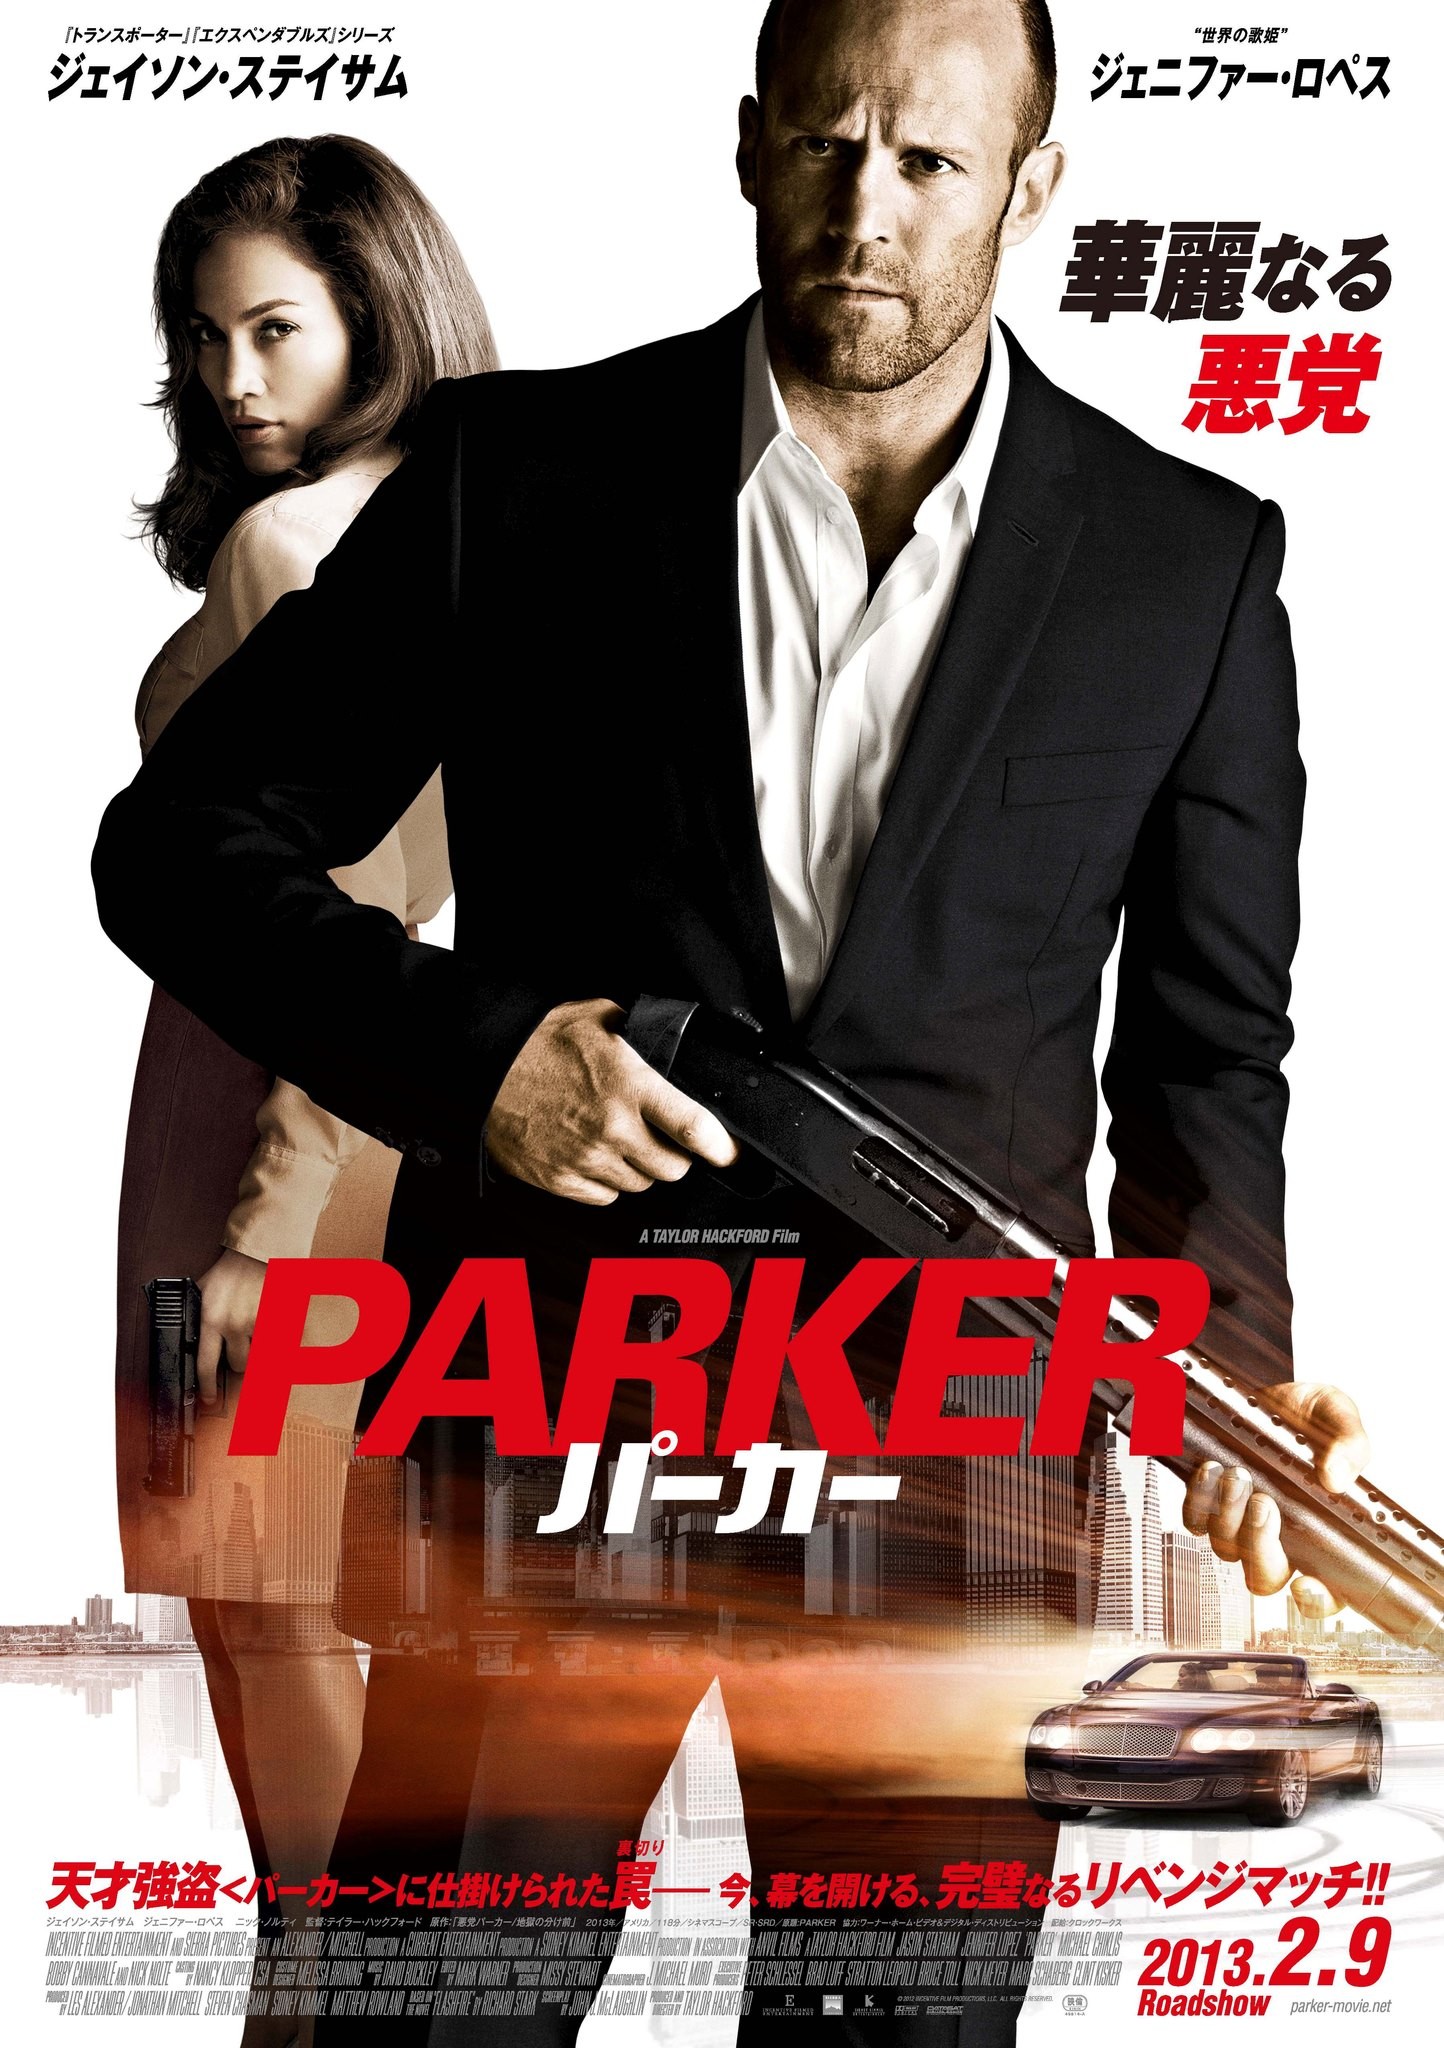 Mega Sized Movie Poster Image for Parker (#7 of 8)